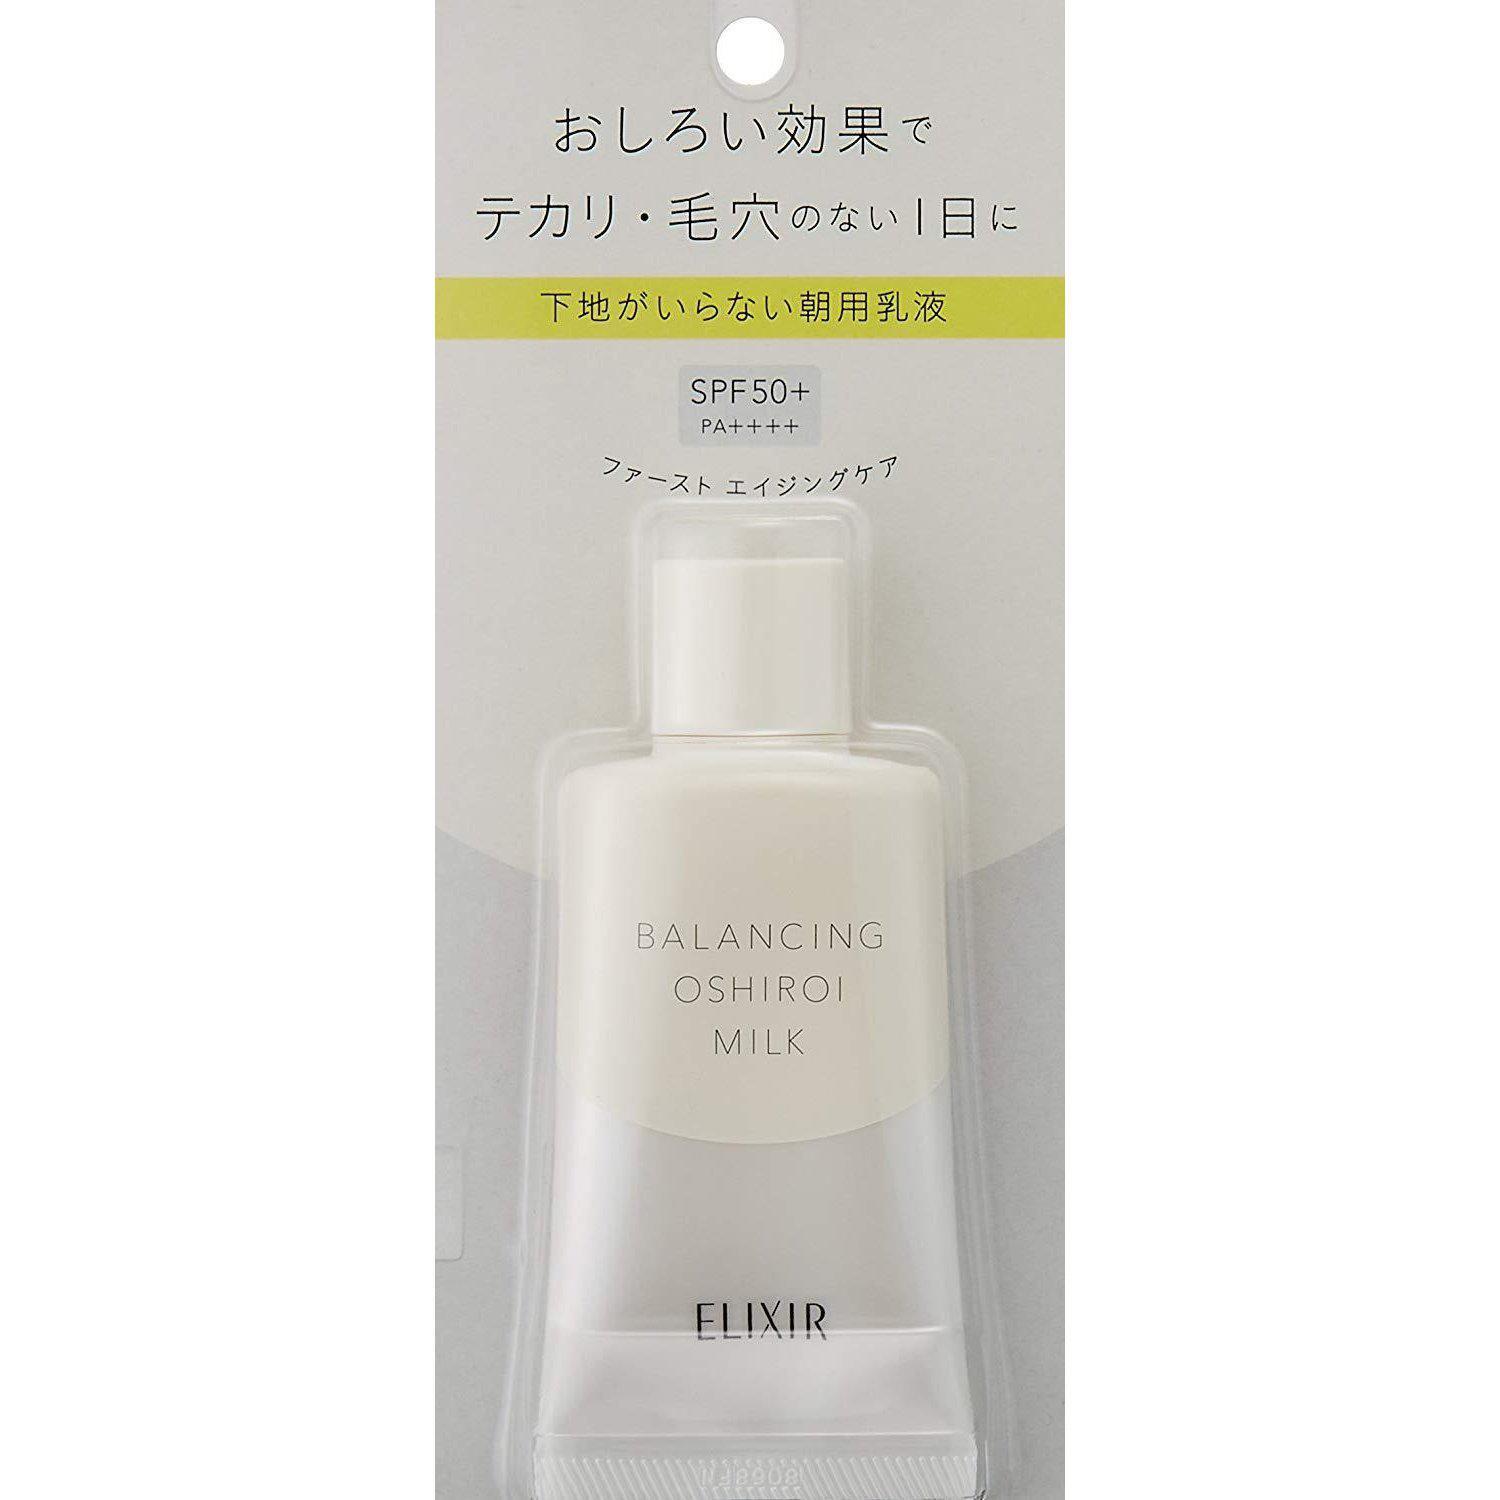 Shiseido Elixir Reflet Balancing Oshiroi Milk SPF 50+ 35g